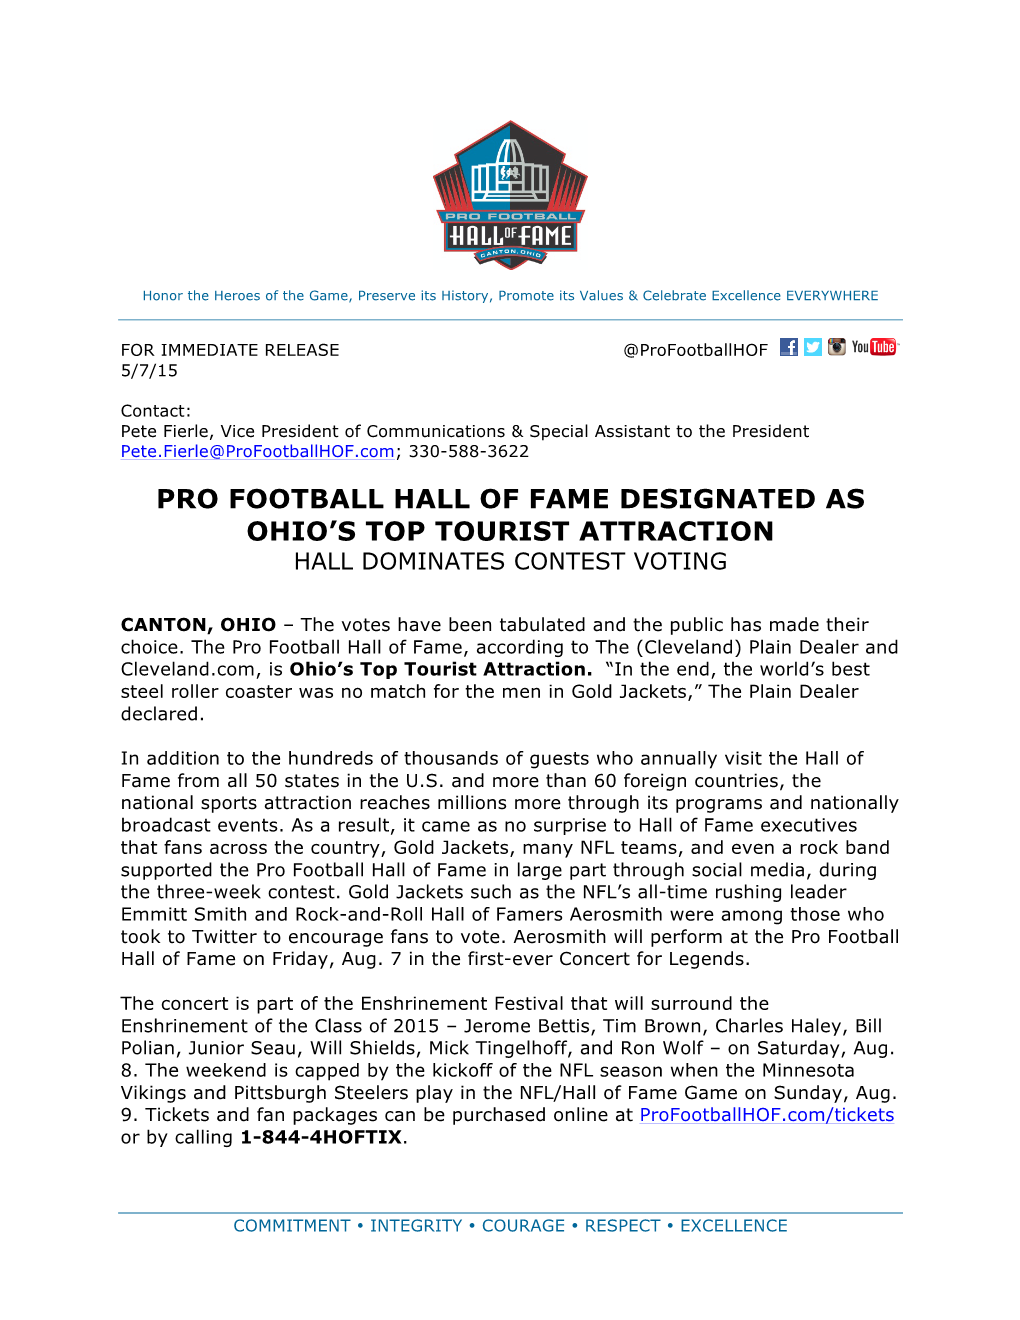 Pro Football Hall of Fame Designated As Ohio's Top